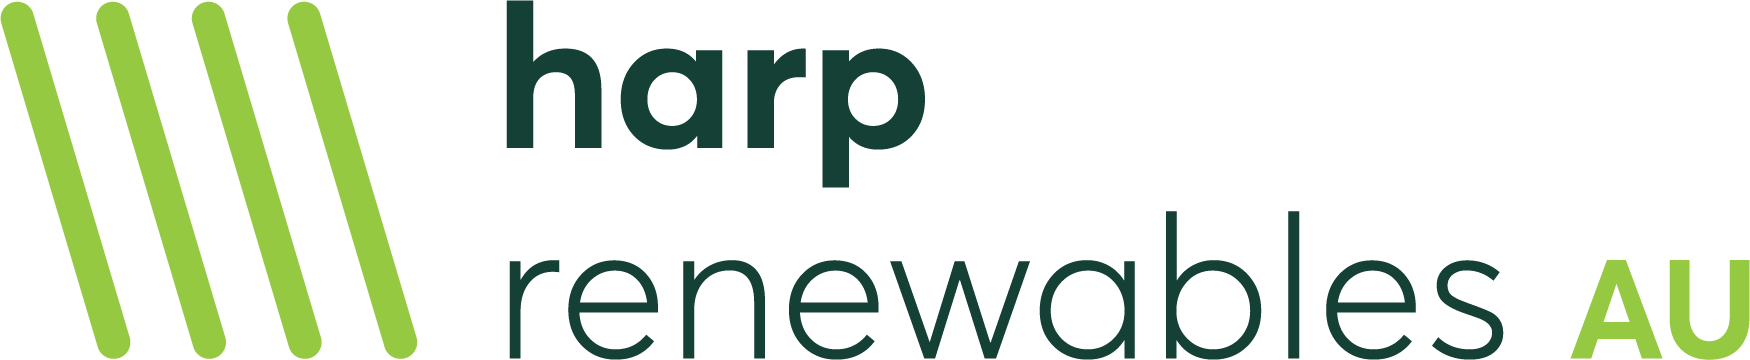 Harp Renewables AU Logo Final_RGB (5).png